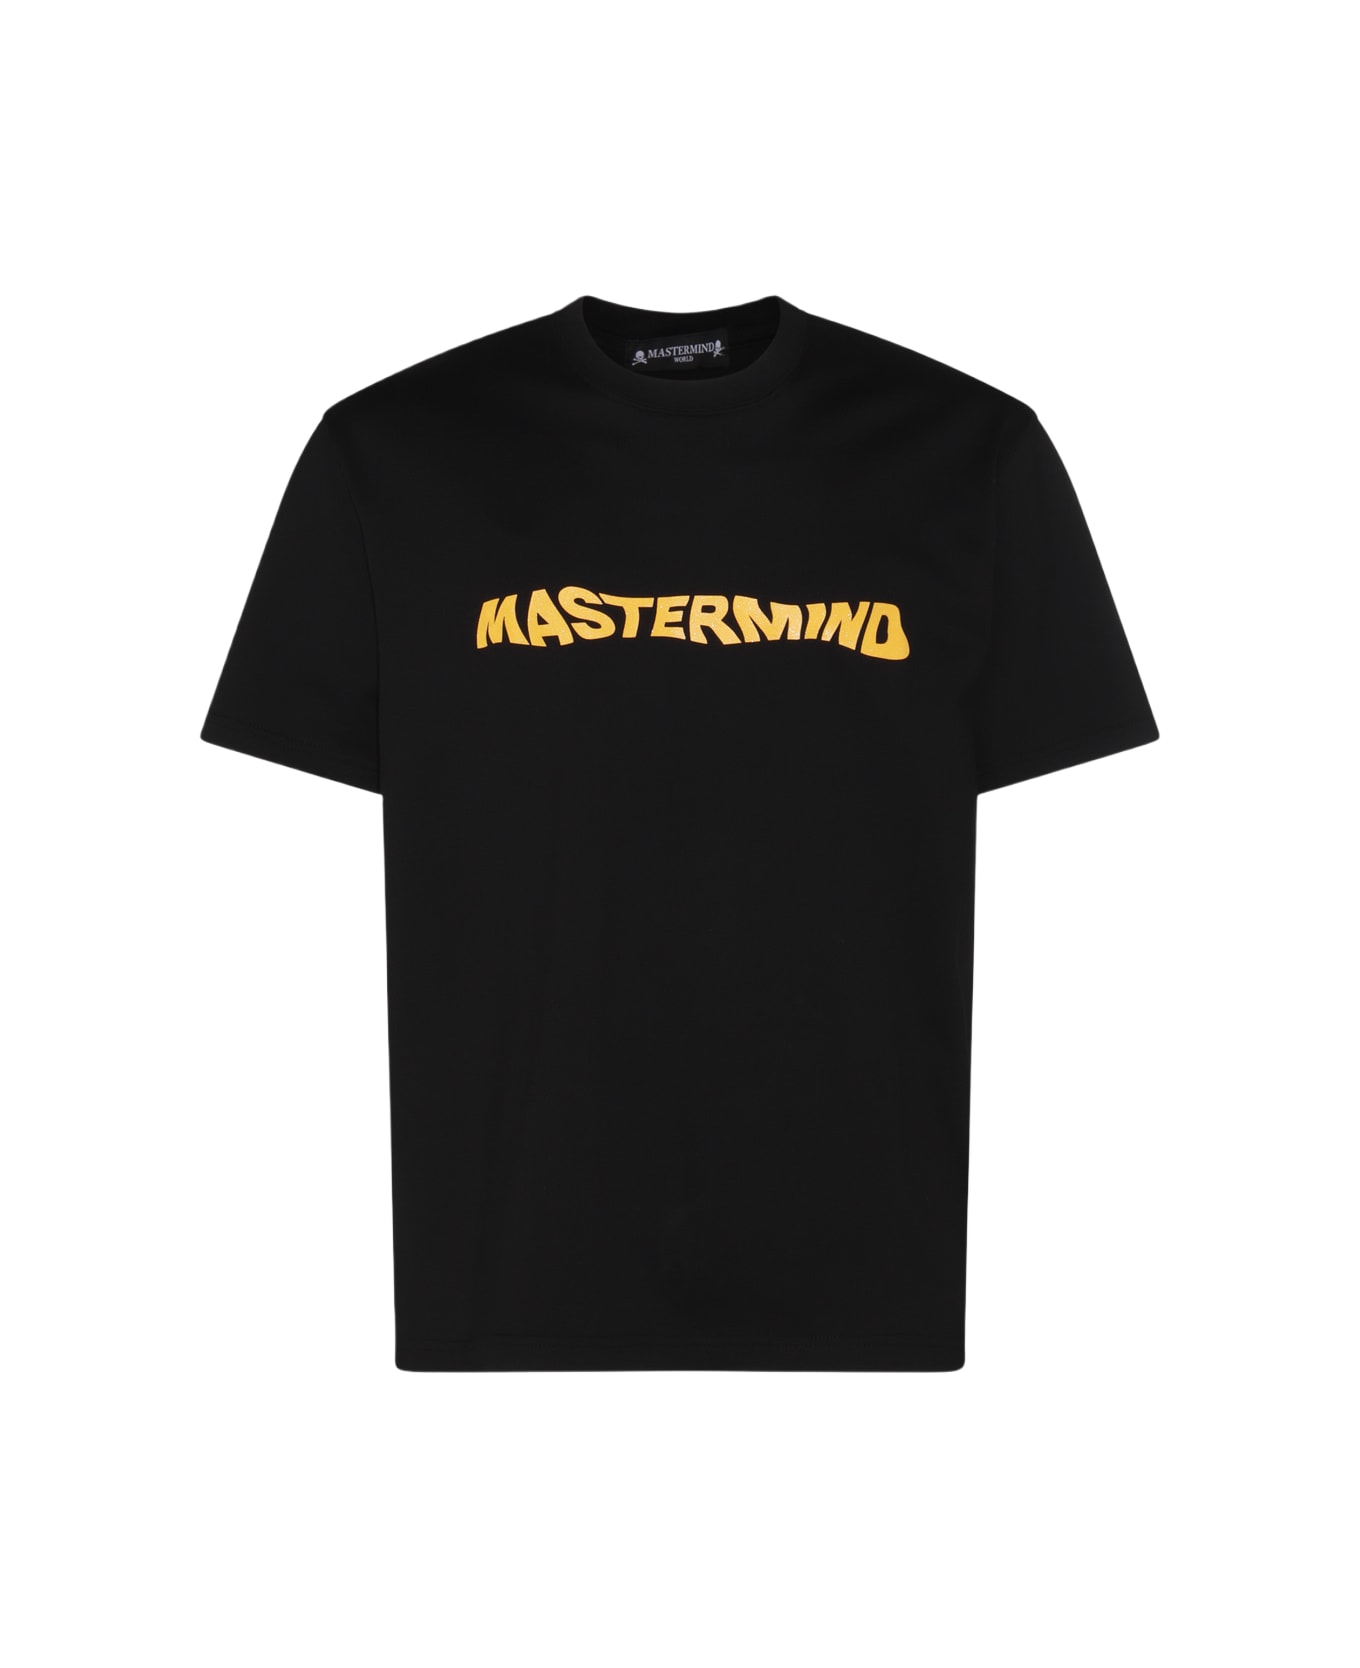 Mastermind Japan Black And Yellow Cotton T-shirt - Black